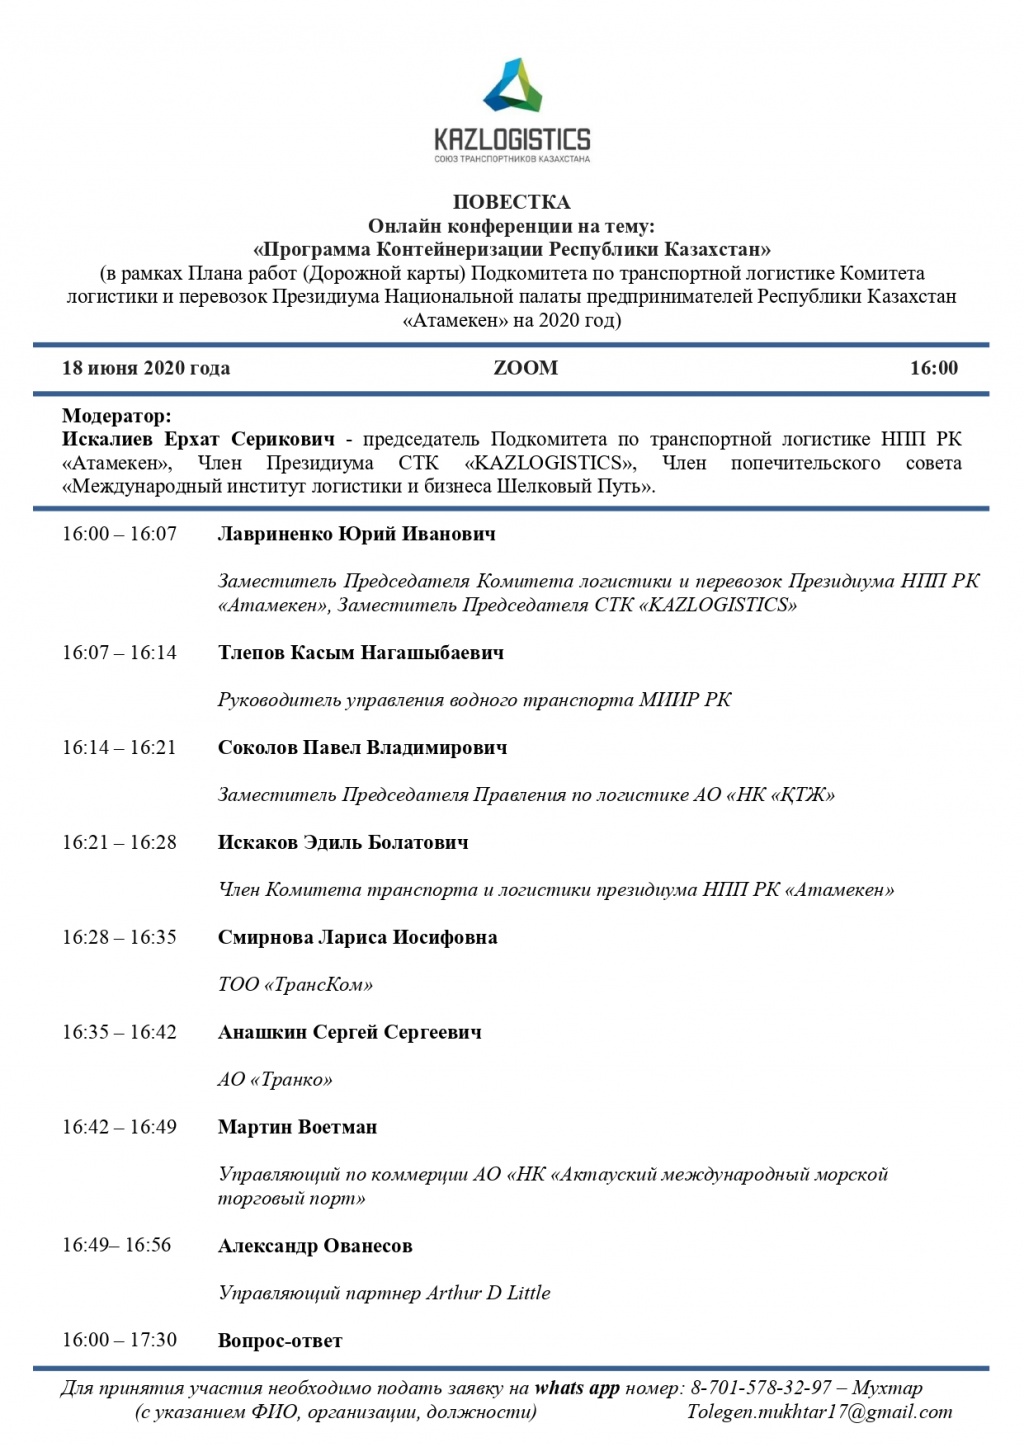 Онлайн конференции на тему: «Программа Контейнеризации Республики Казахстан»